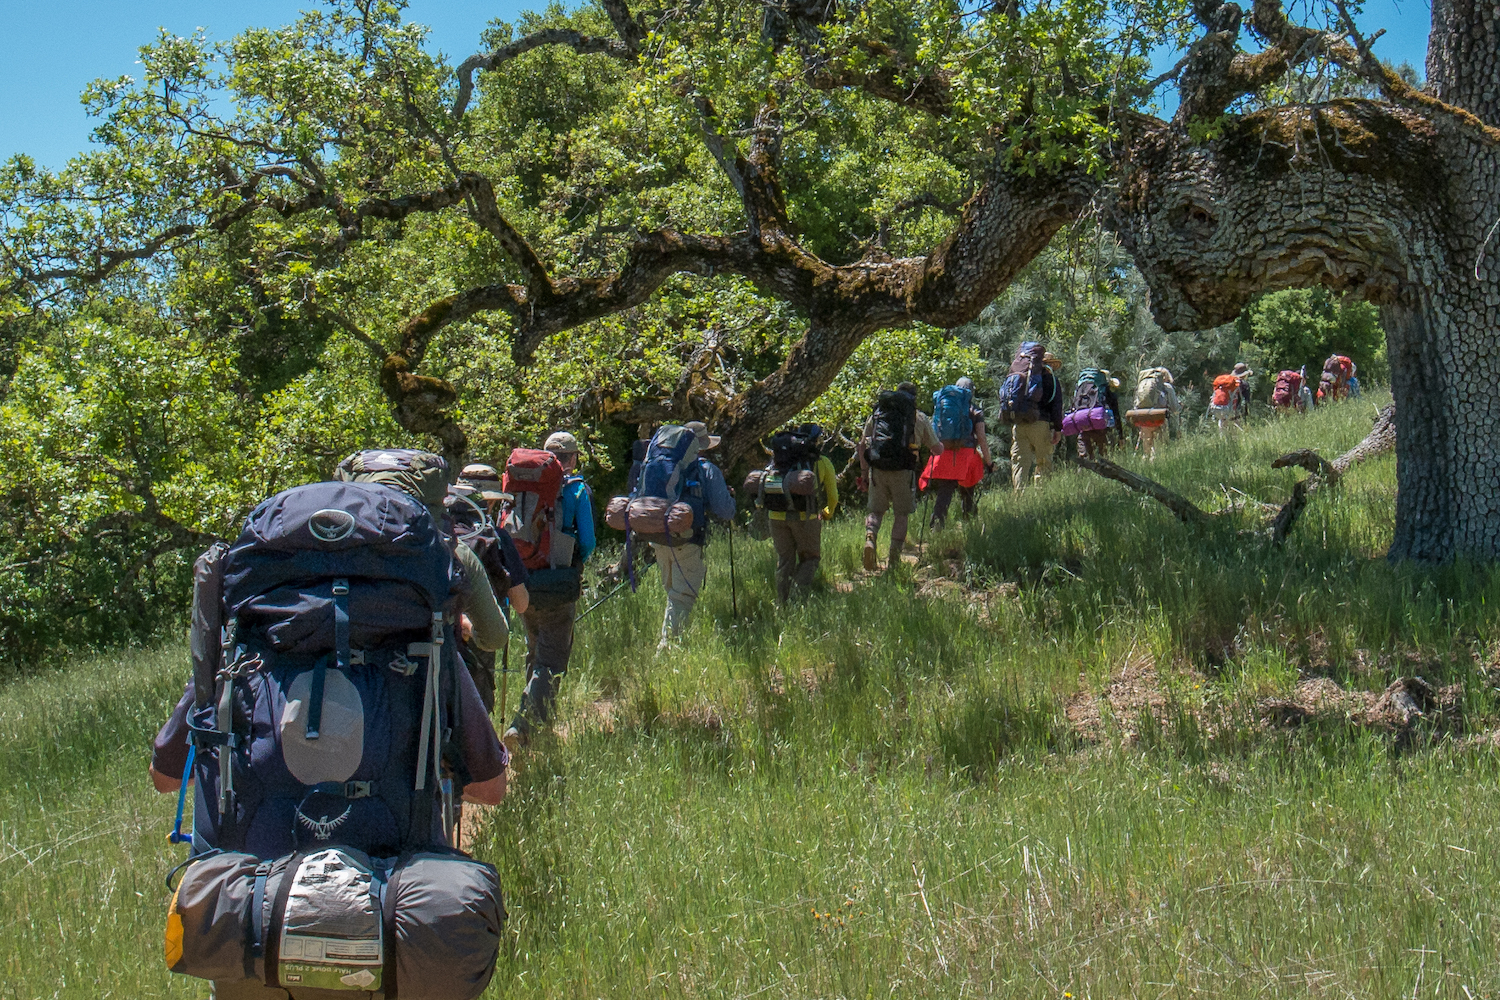 San Diego Local Hiking Group the Sierra Club hiking up a green hillside